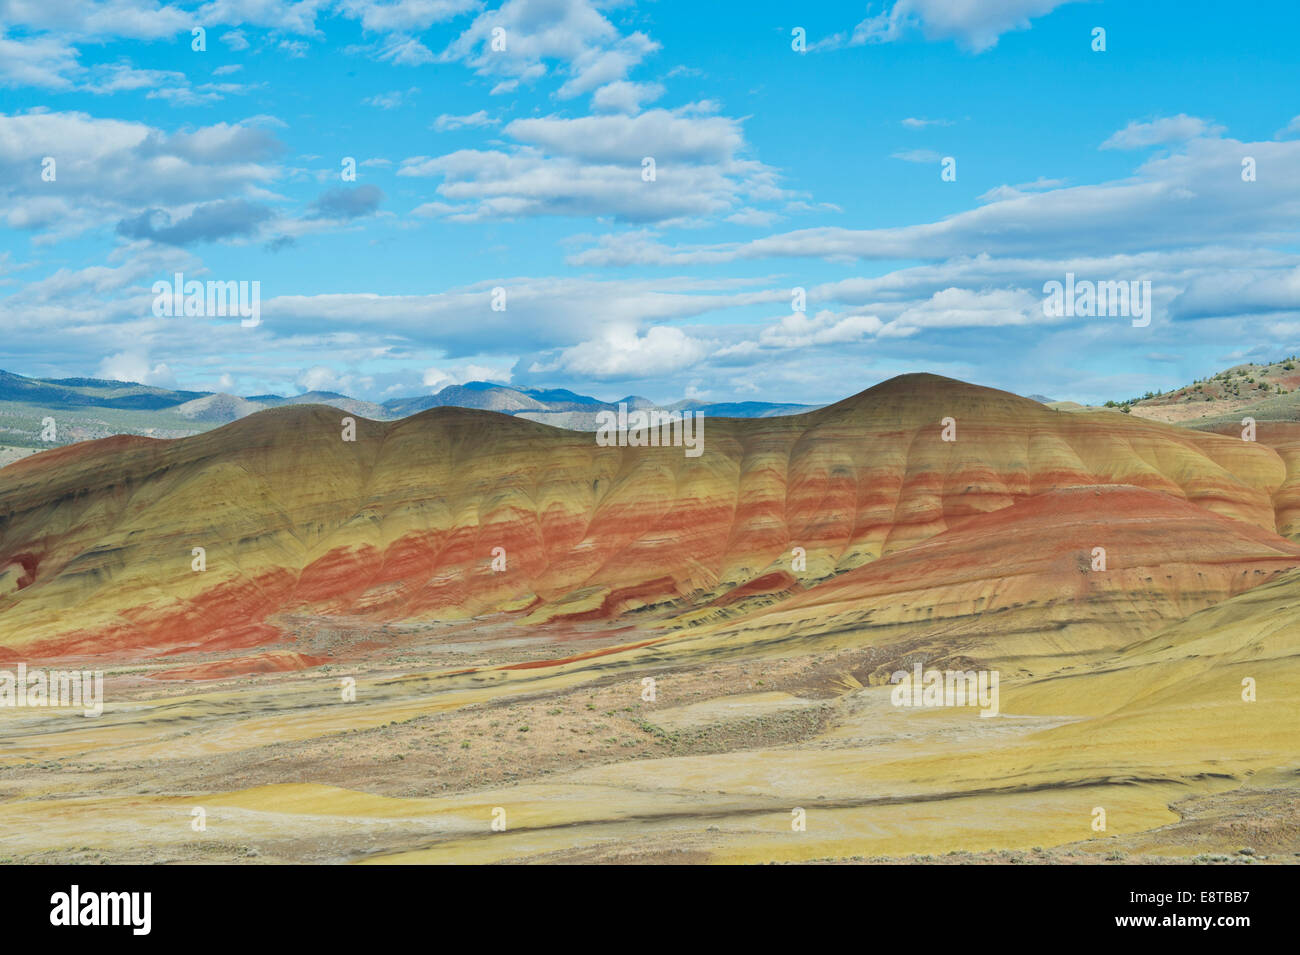 Painted hills in desert landscape, Bend, Oregon, United States Stock Photo